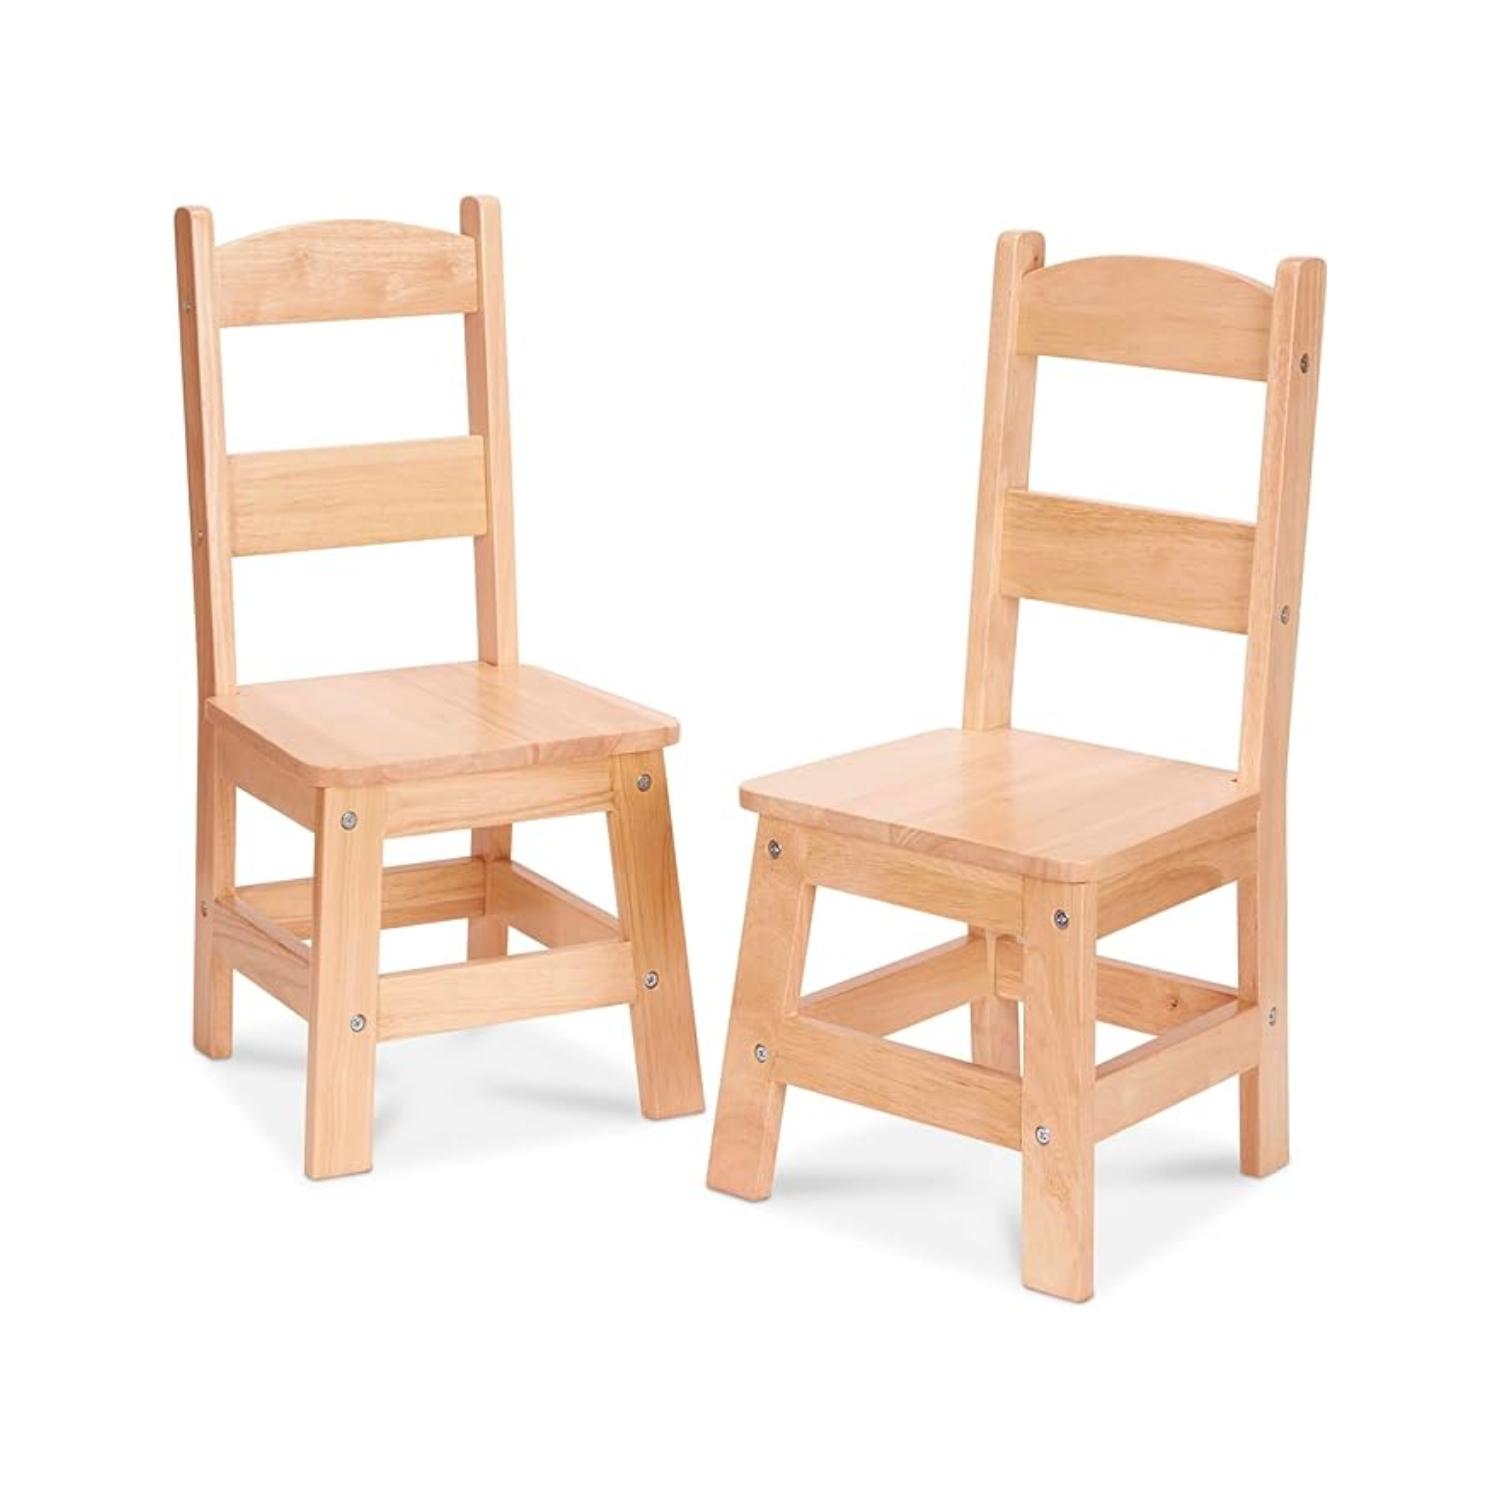 Montessori Melissa & Doug Wooden Chairs Set of 2 Blonde